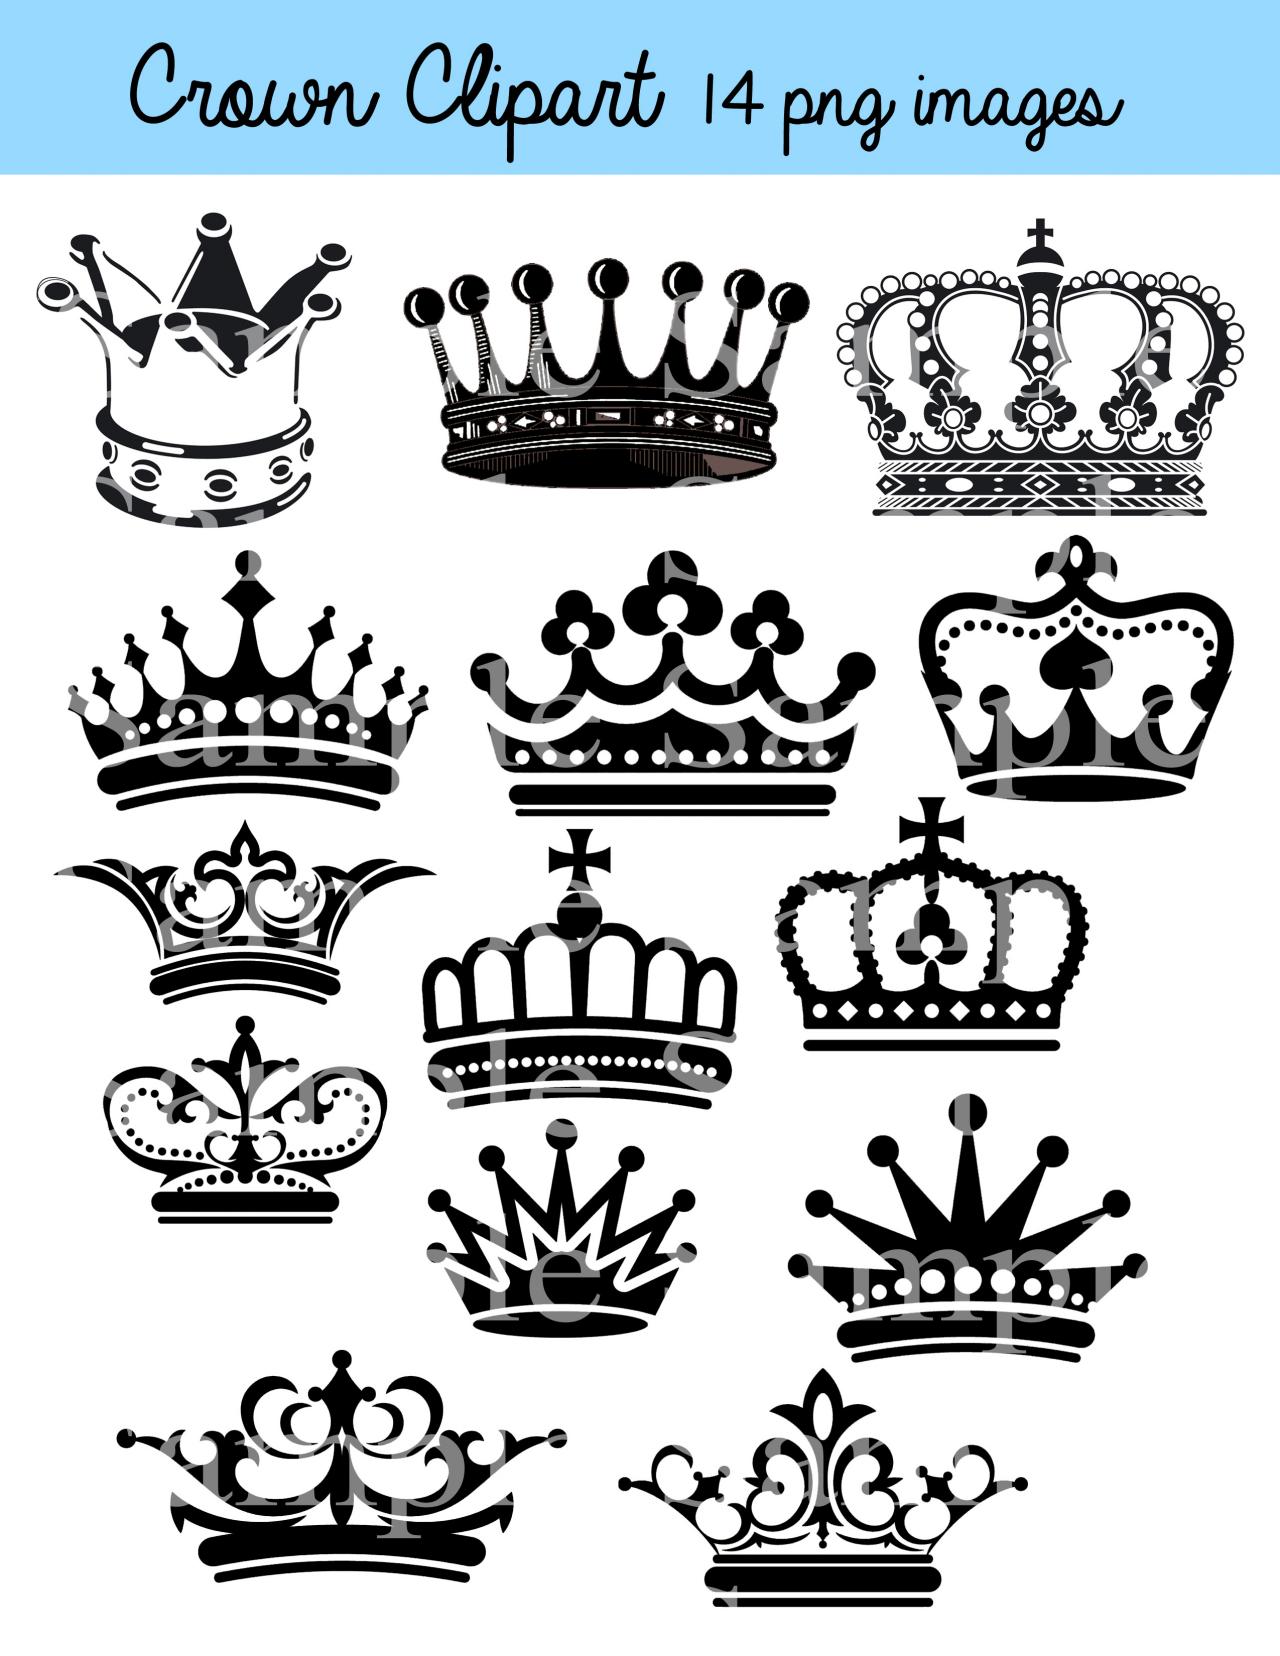 royal crown clipart images - photo #42